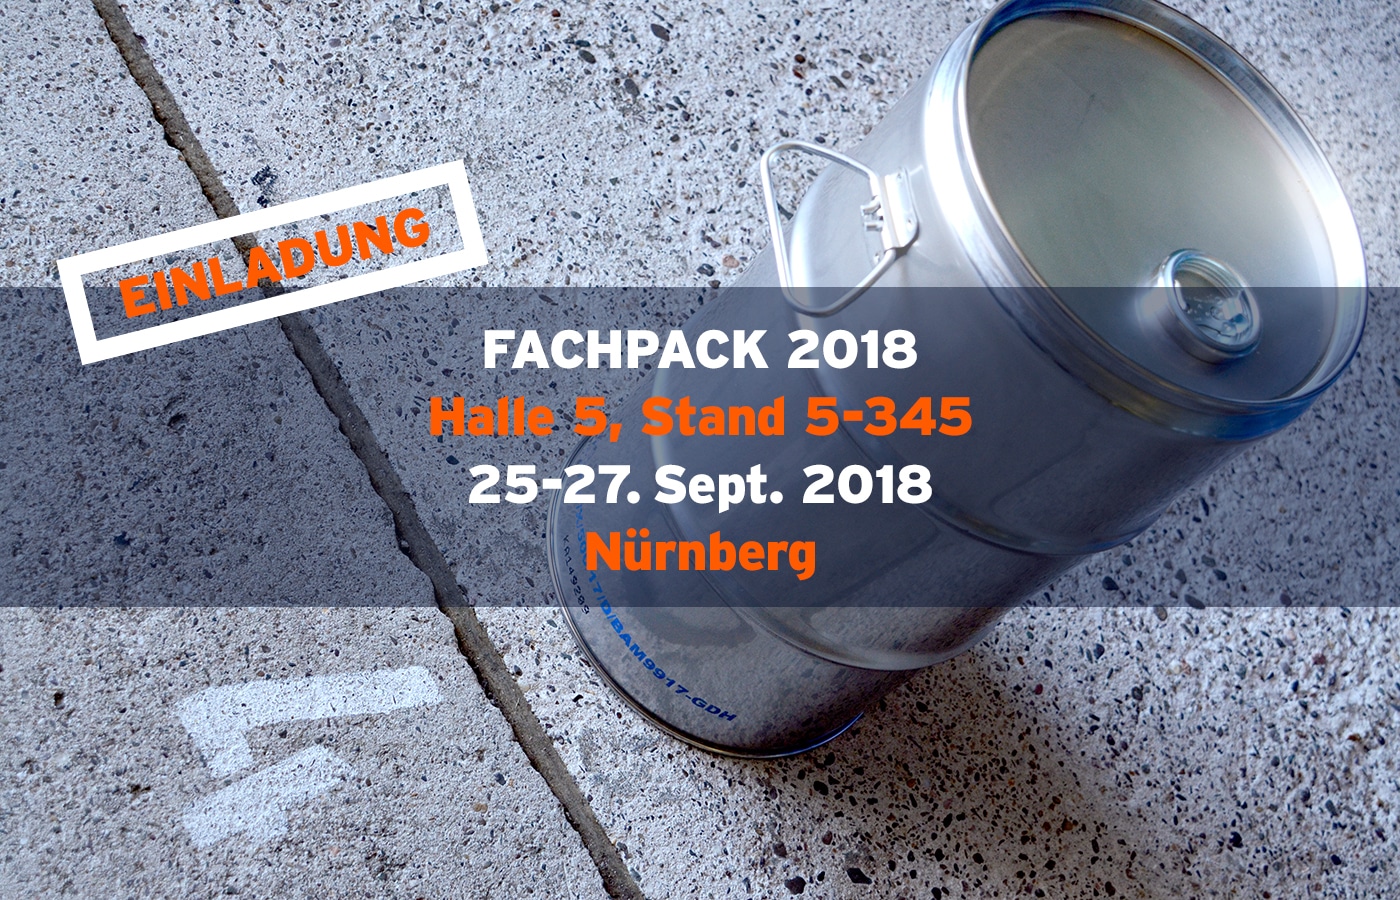 WEDTHOFF @ FACHPACK präsentiert Industrieverpackungen Gefahrgutverpackung, Stahblechverpackung, Spundbehälter, Stahlfässer, Stahlfass, Deckelfass, Spundfass, Kombifass